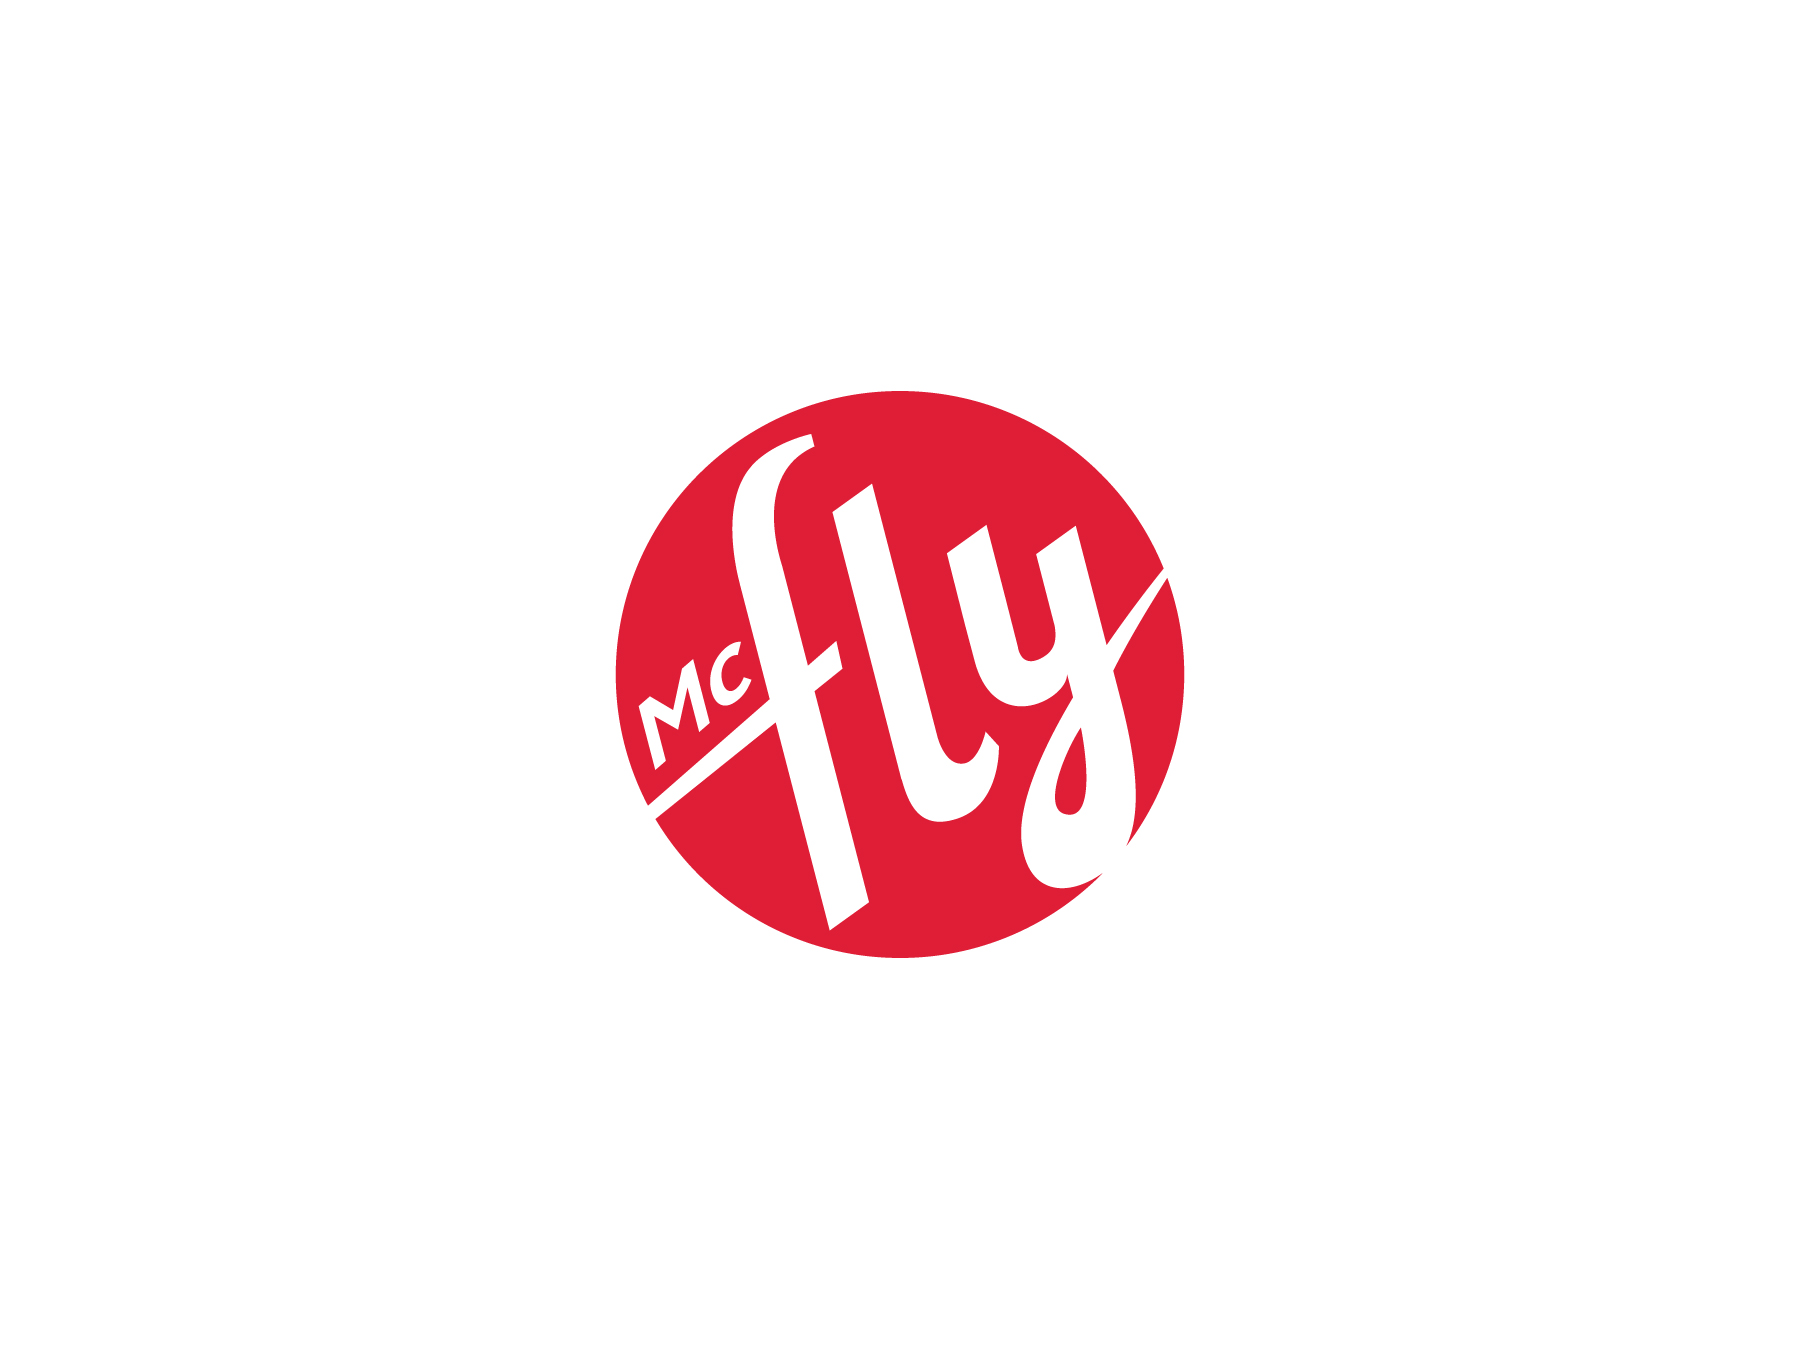 mcfly_logo